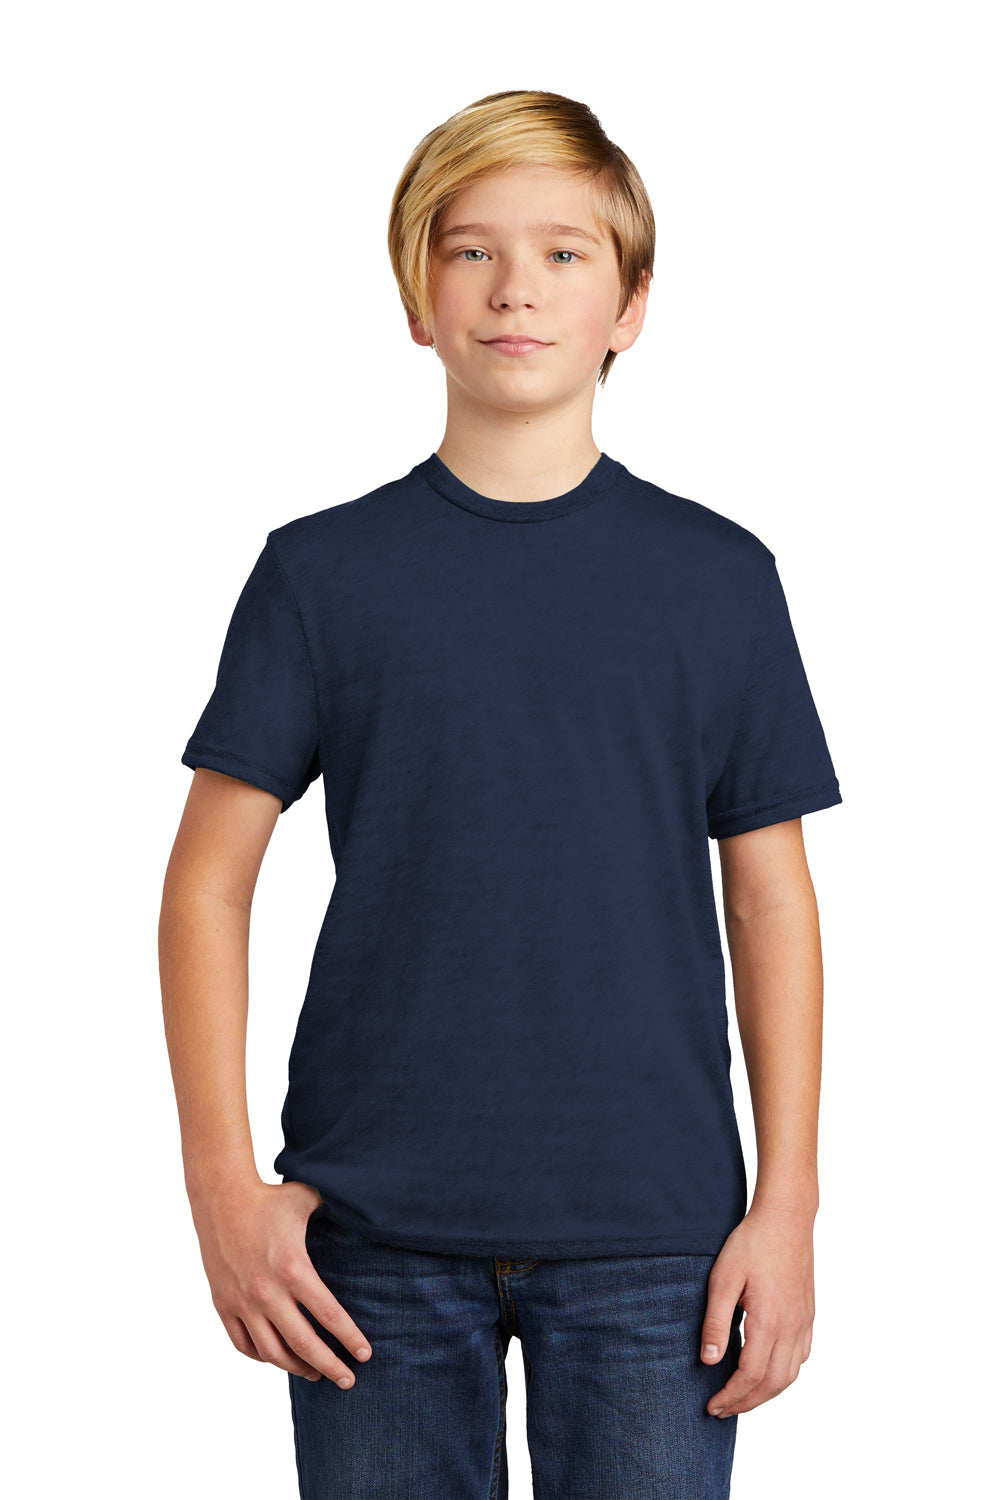 Allmade AL207 Youth Short Sleeve Crewneck T-Shirt Night Sky Navy Blue Model Front